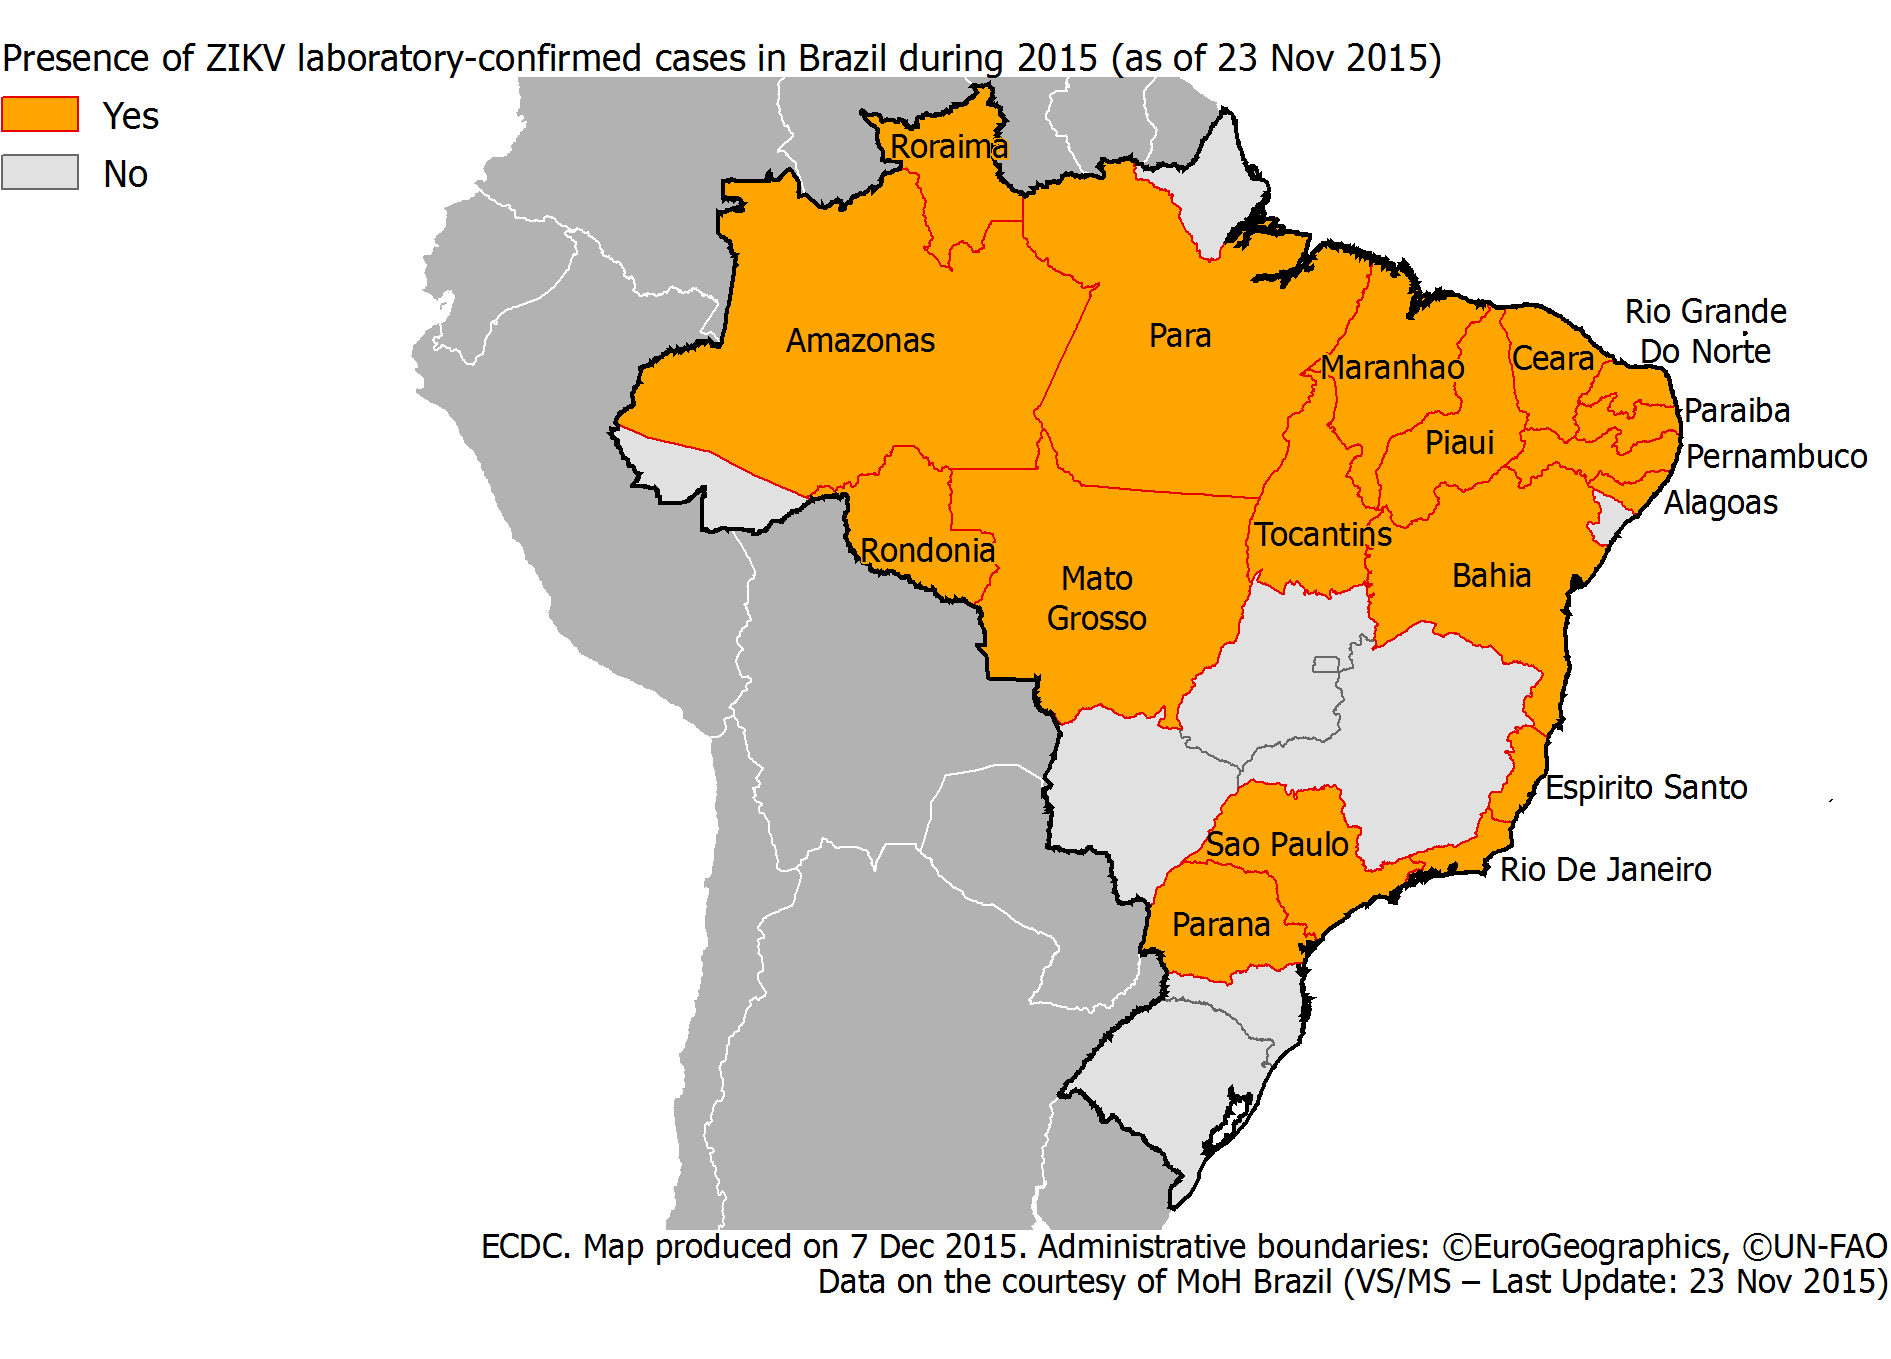 states-lab-confirmed-zika-cases-brazil-nov-2015-1